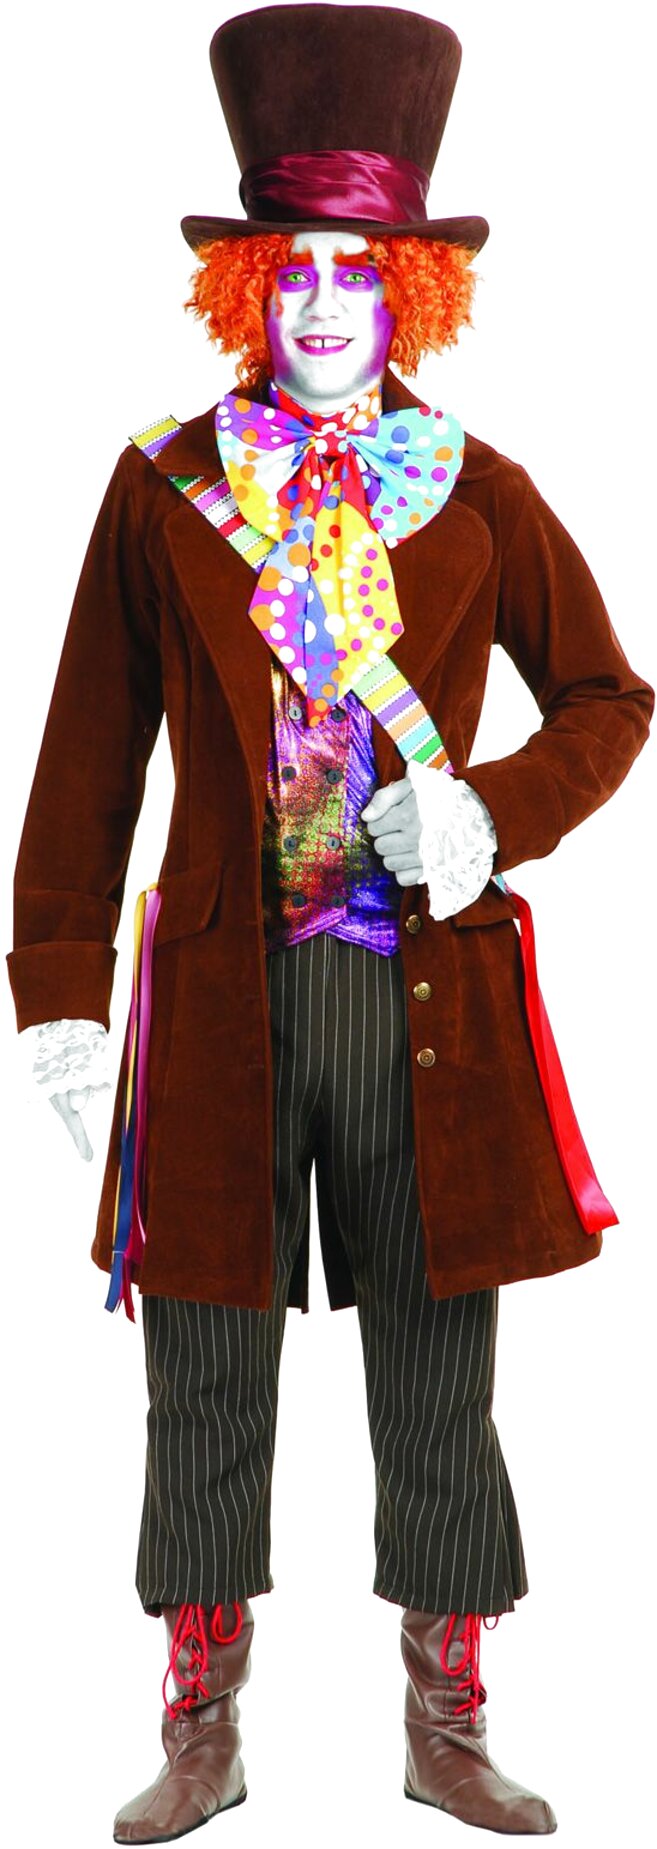 Mad Hatter Fancy Dress Costume for sale in UK